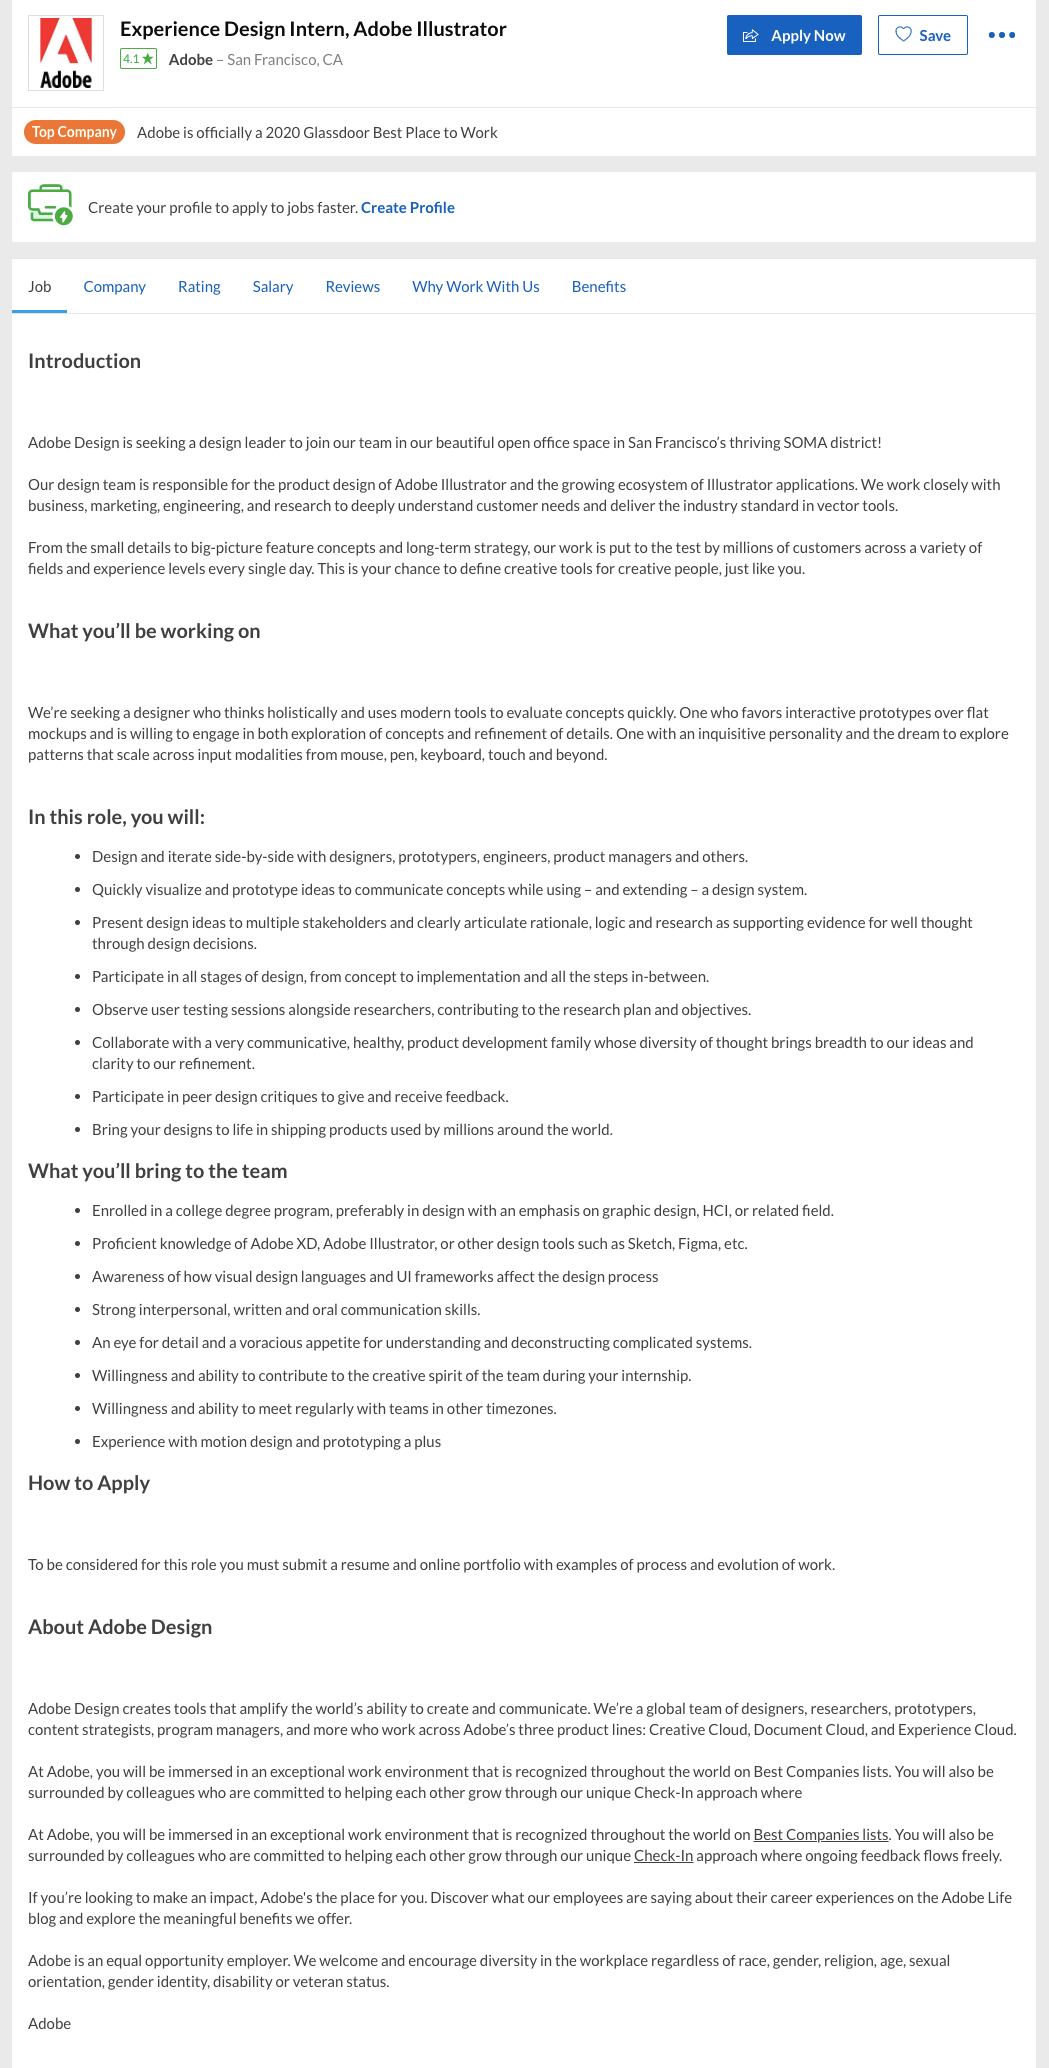 Adobe UX designer internship post in 2020